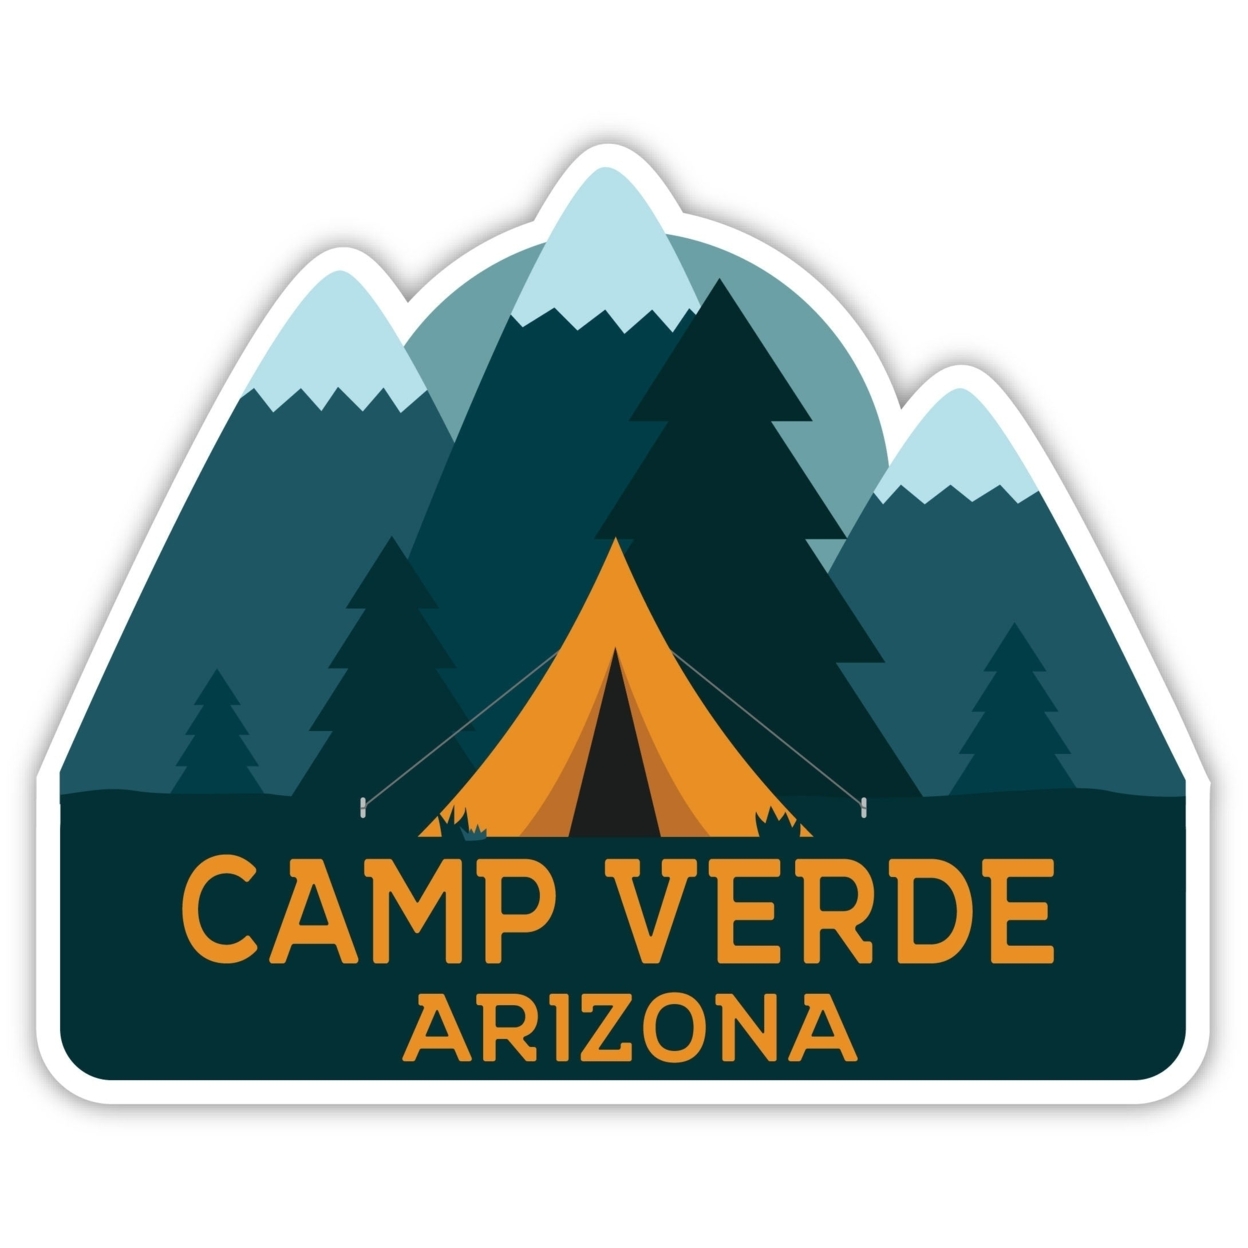 Camp Verde Arizona Souvenir Decorative Stickers (Choose Theme And Size) - 4-Pack, 12-Inch, Tent